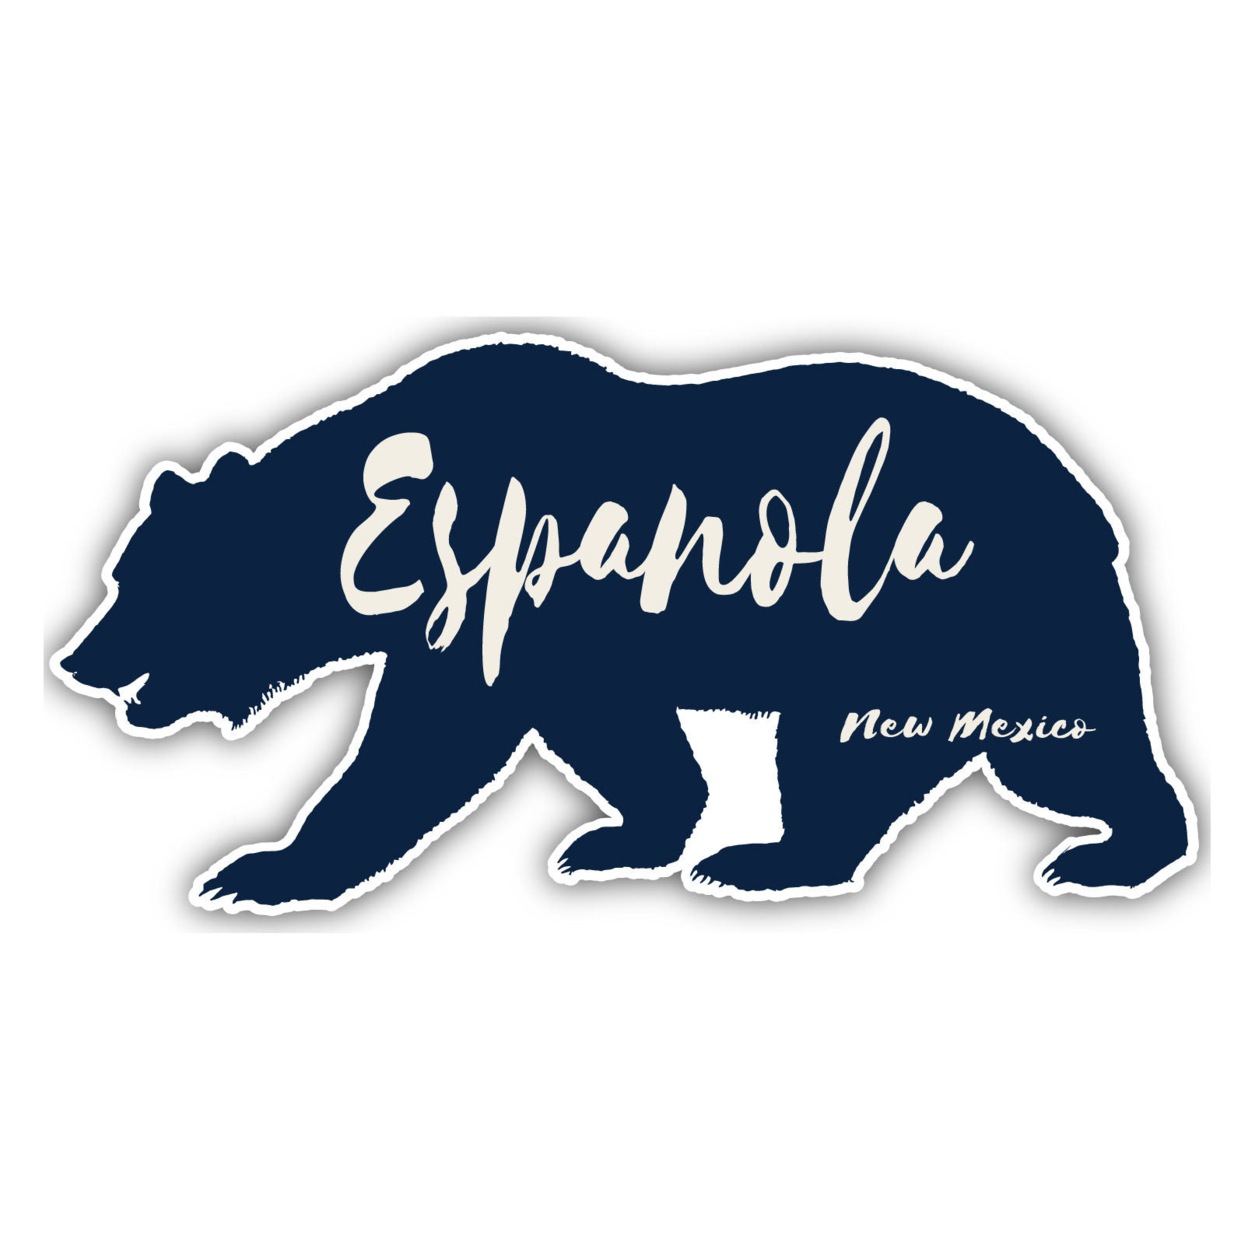 Espanola New Mexico Souvenir Decorative Stickers (Choose Theme And Size) - Single Unit, 12-Inch, Bear